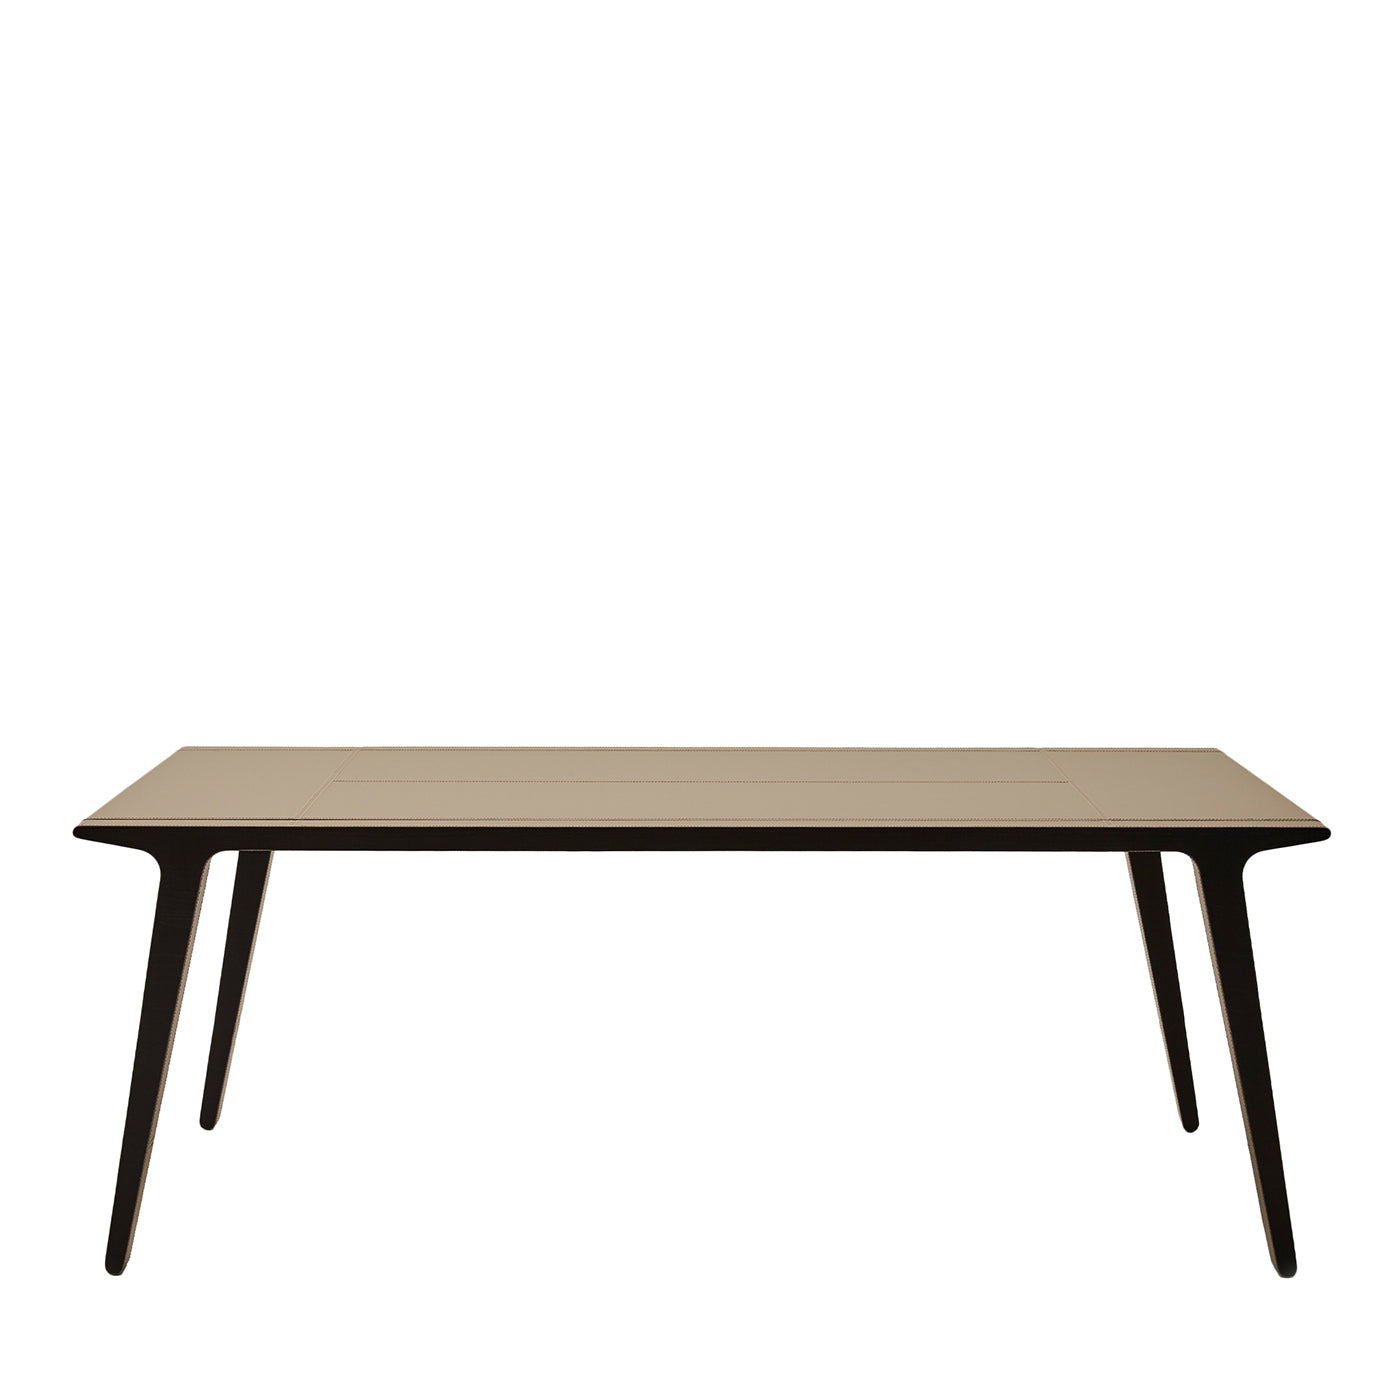 Laicon Taupe & Dark-Durmast Table by Nicola Romanelli - Main view